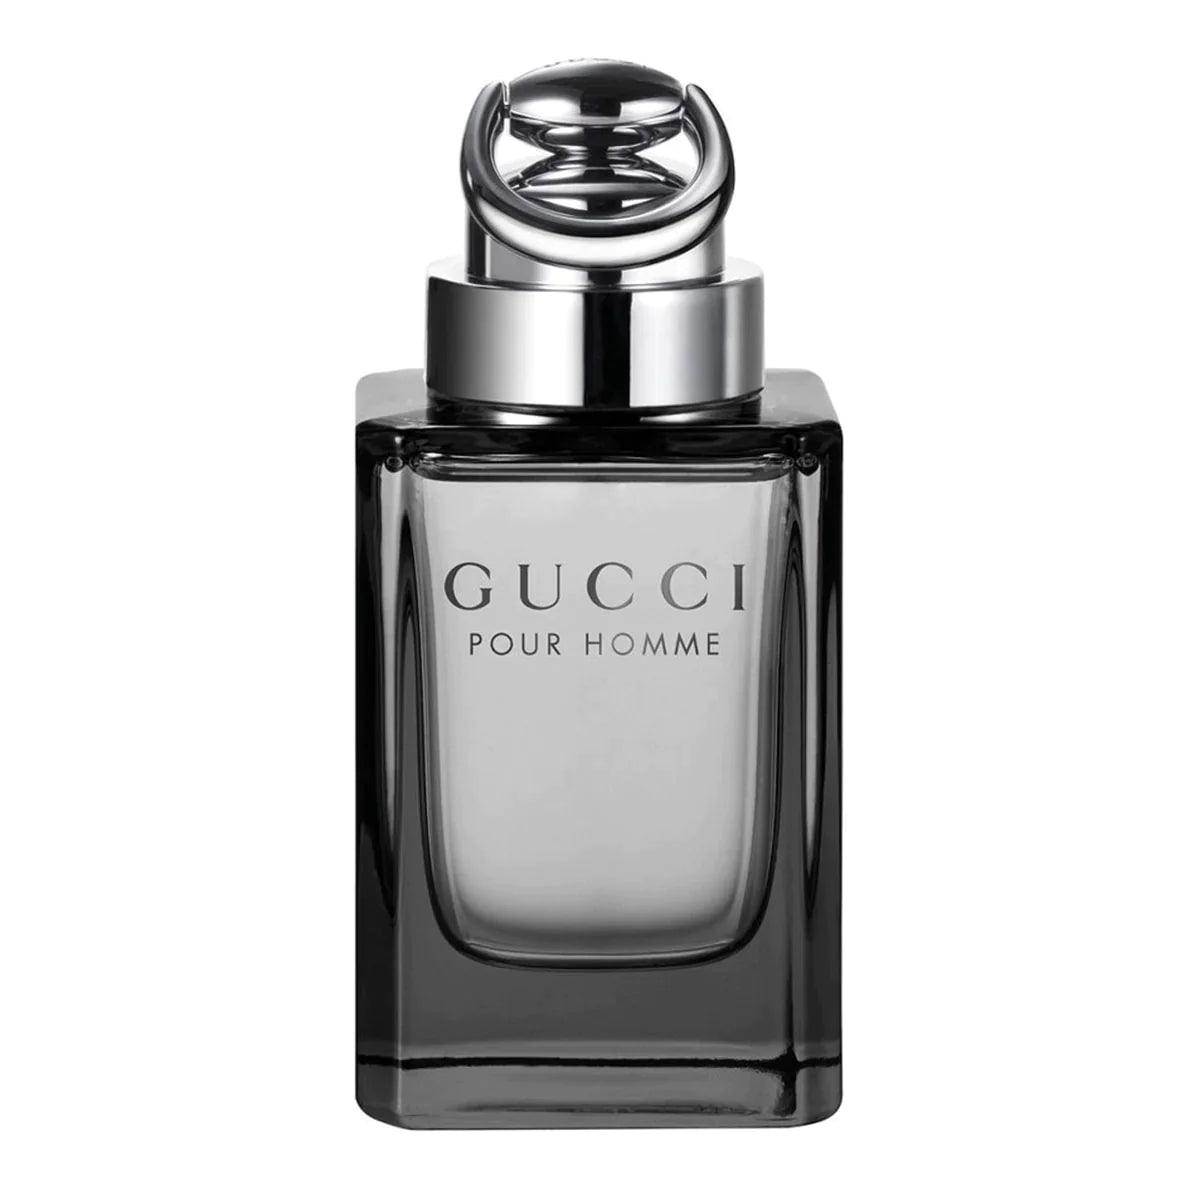 Gucci by Gucci Pour Homme - Divine Scent